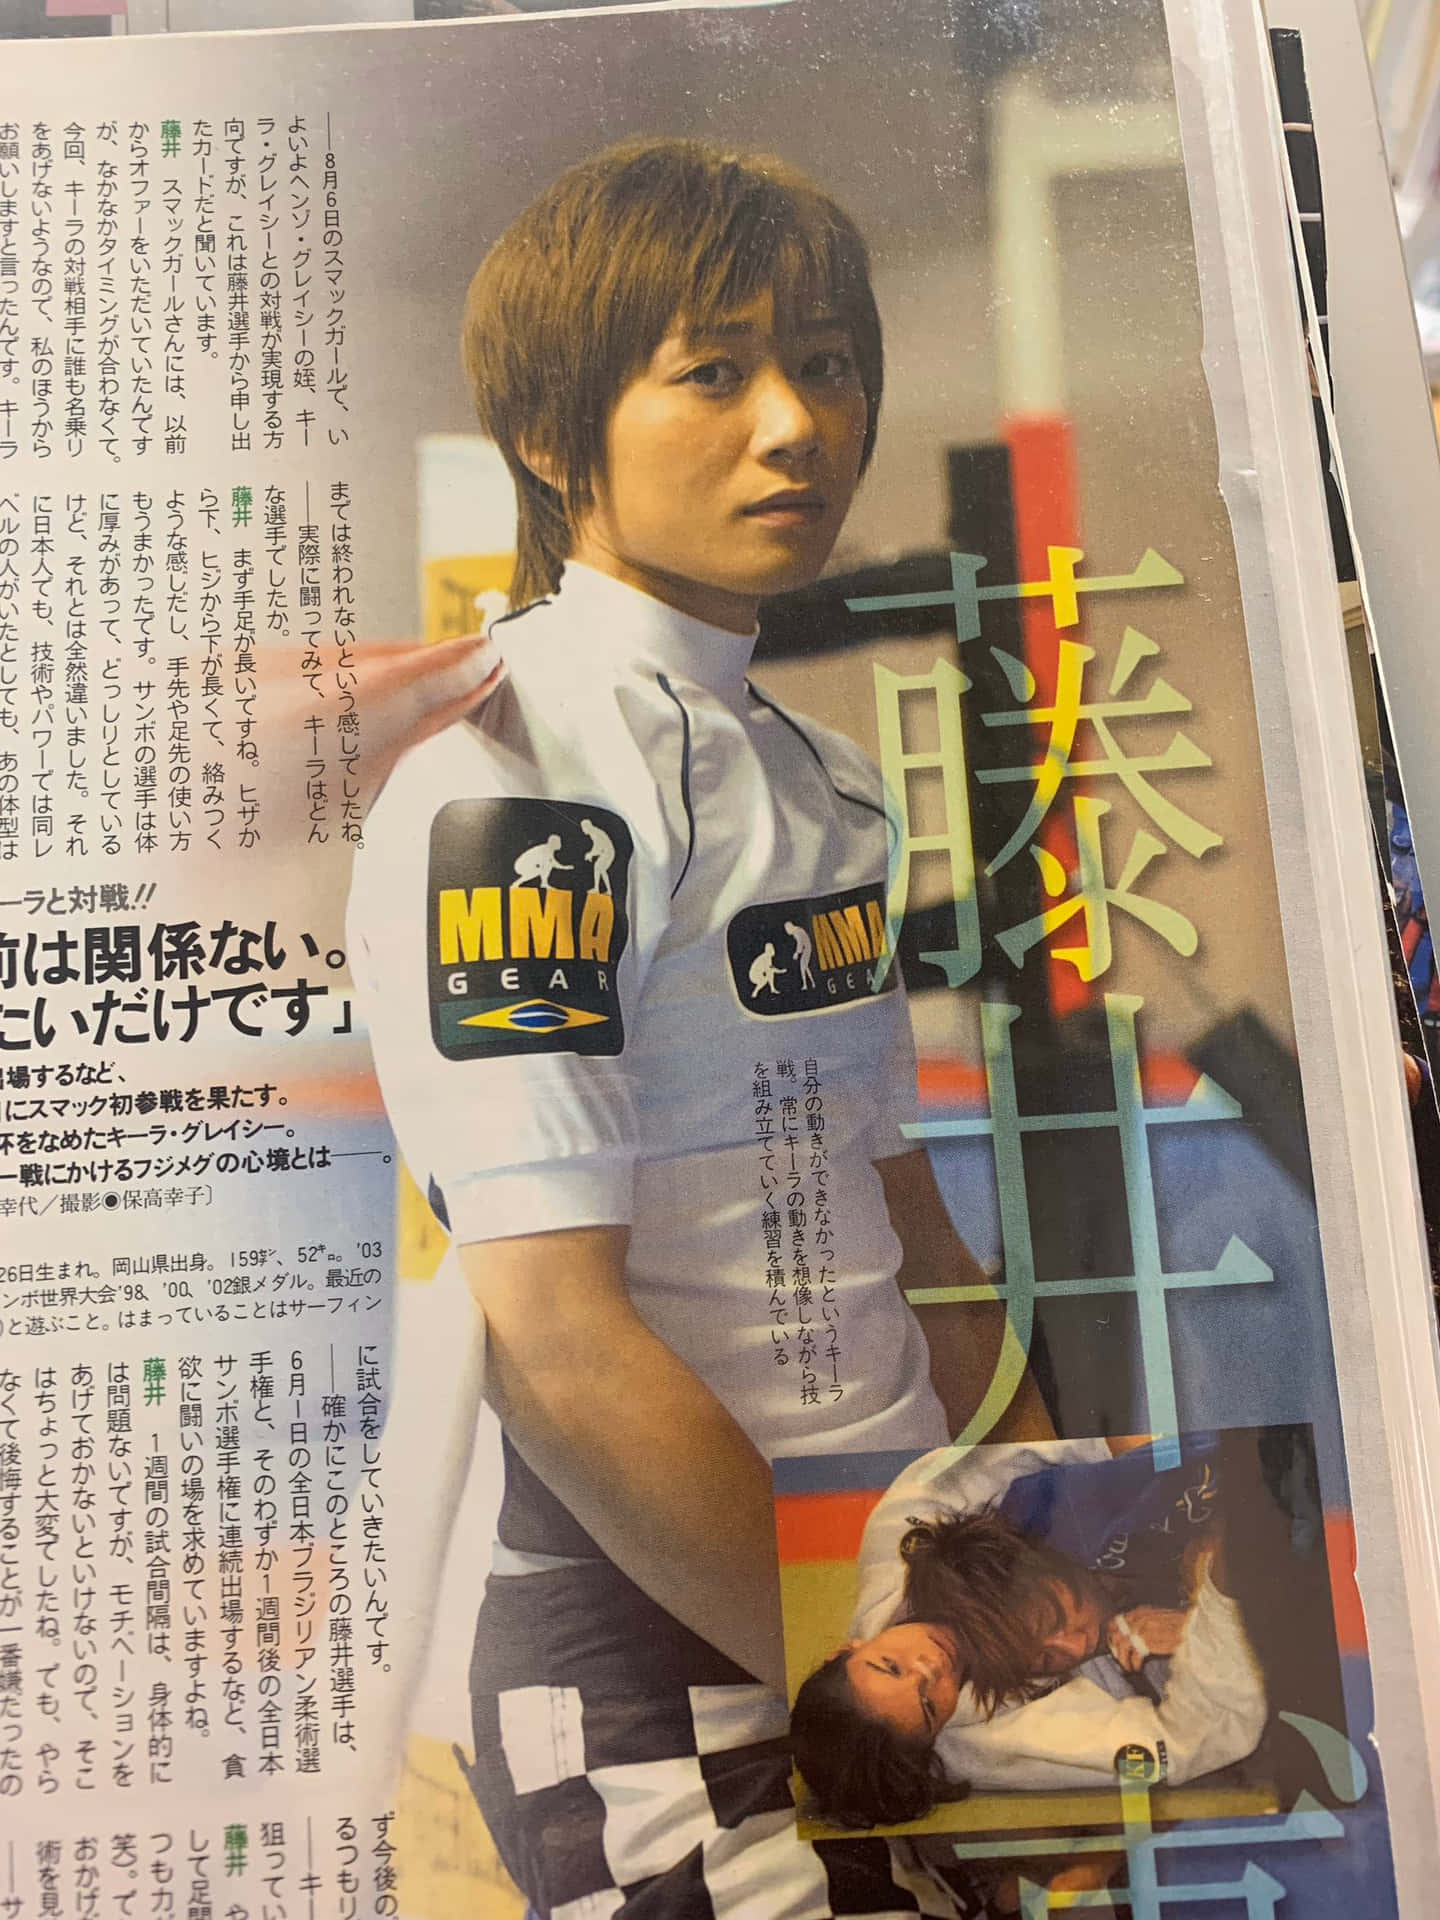 Japanese Mixed Martial Artist Megumi Fujii News Article Wallpaper